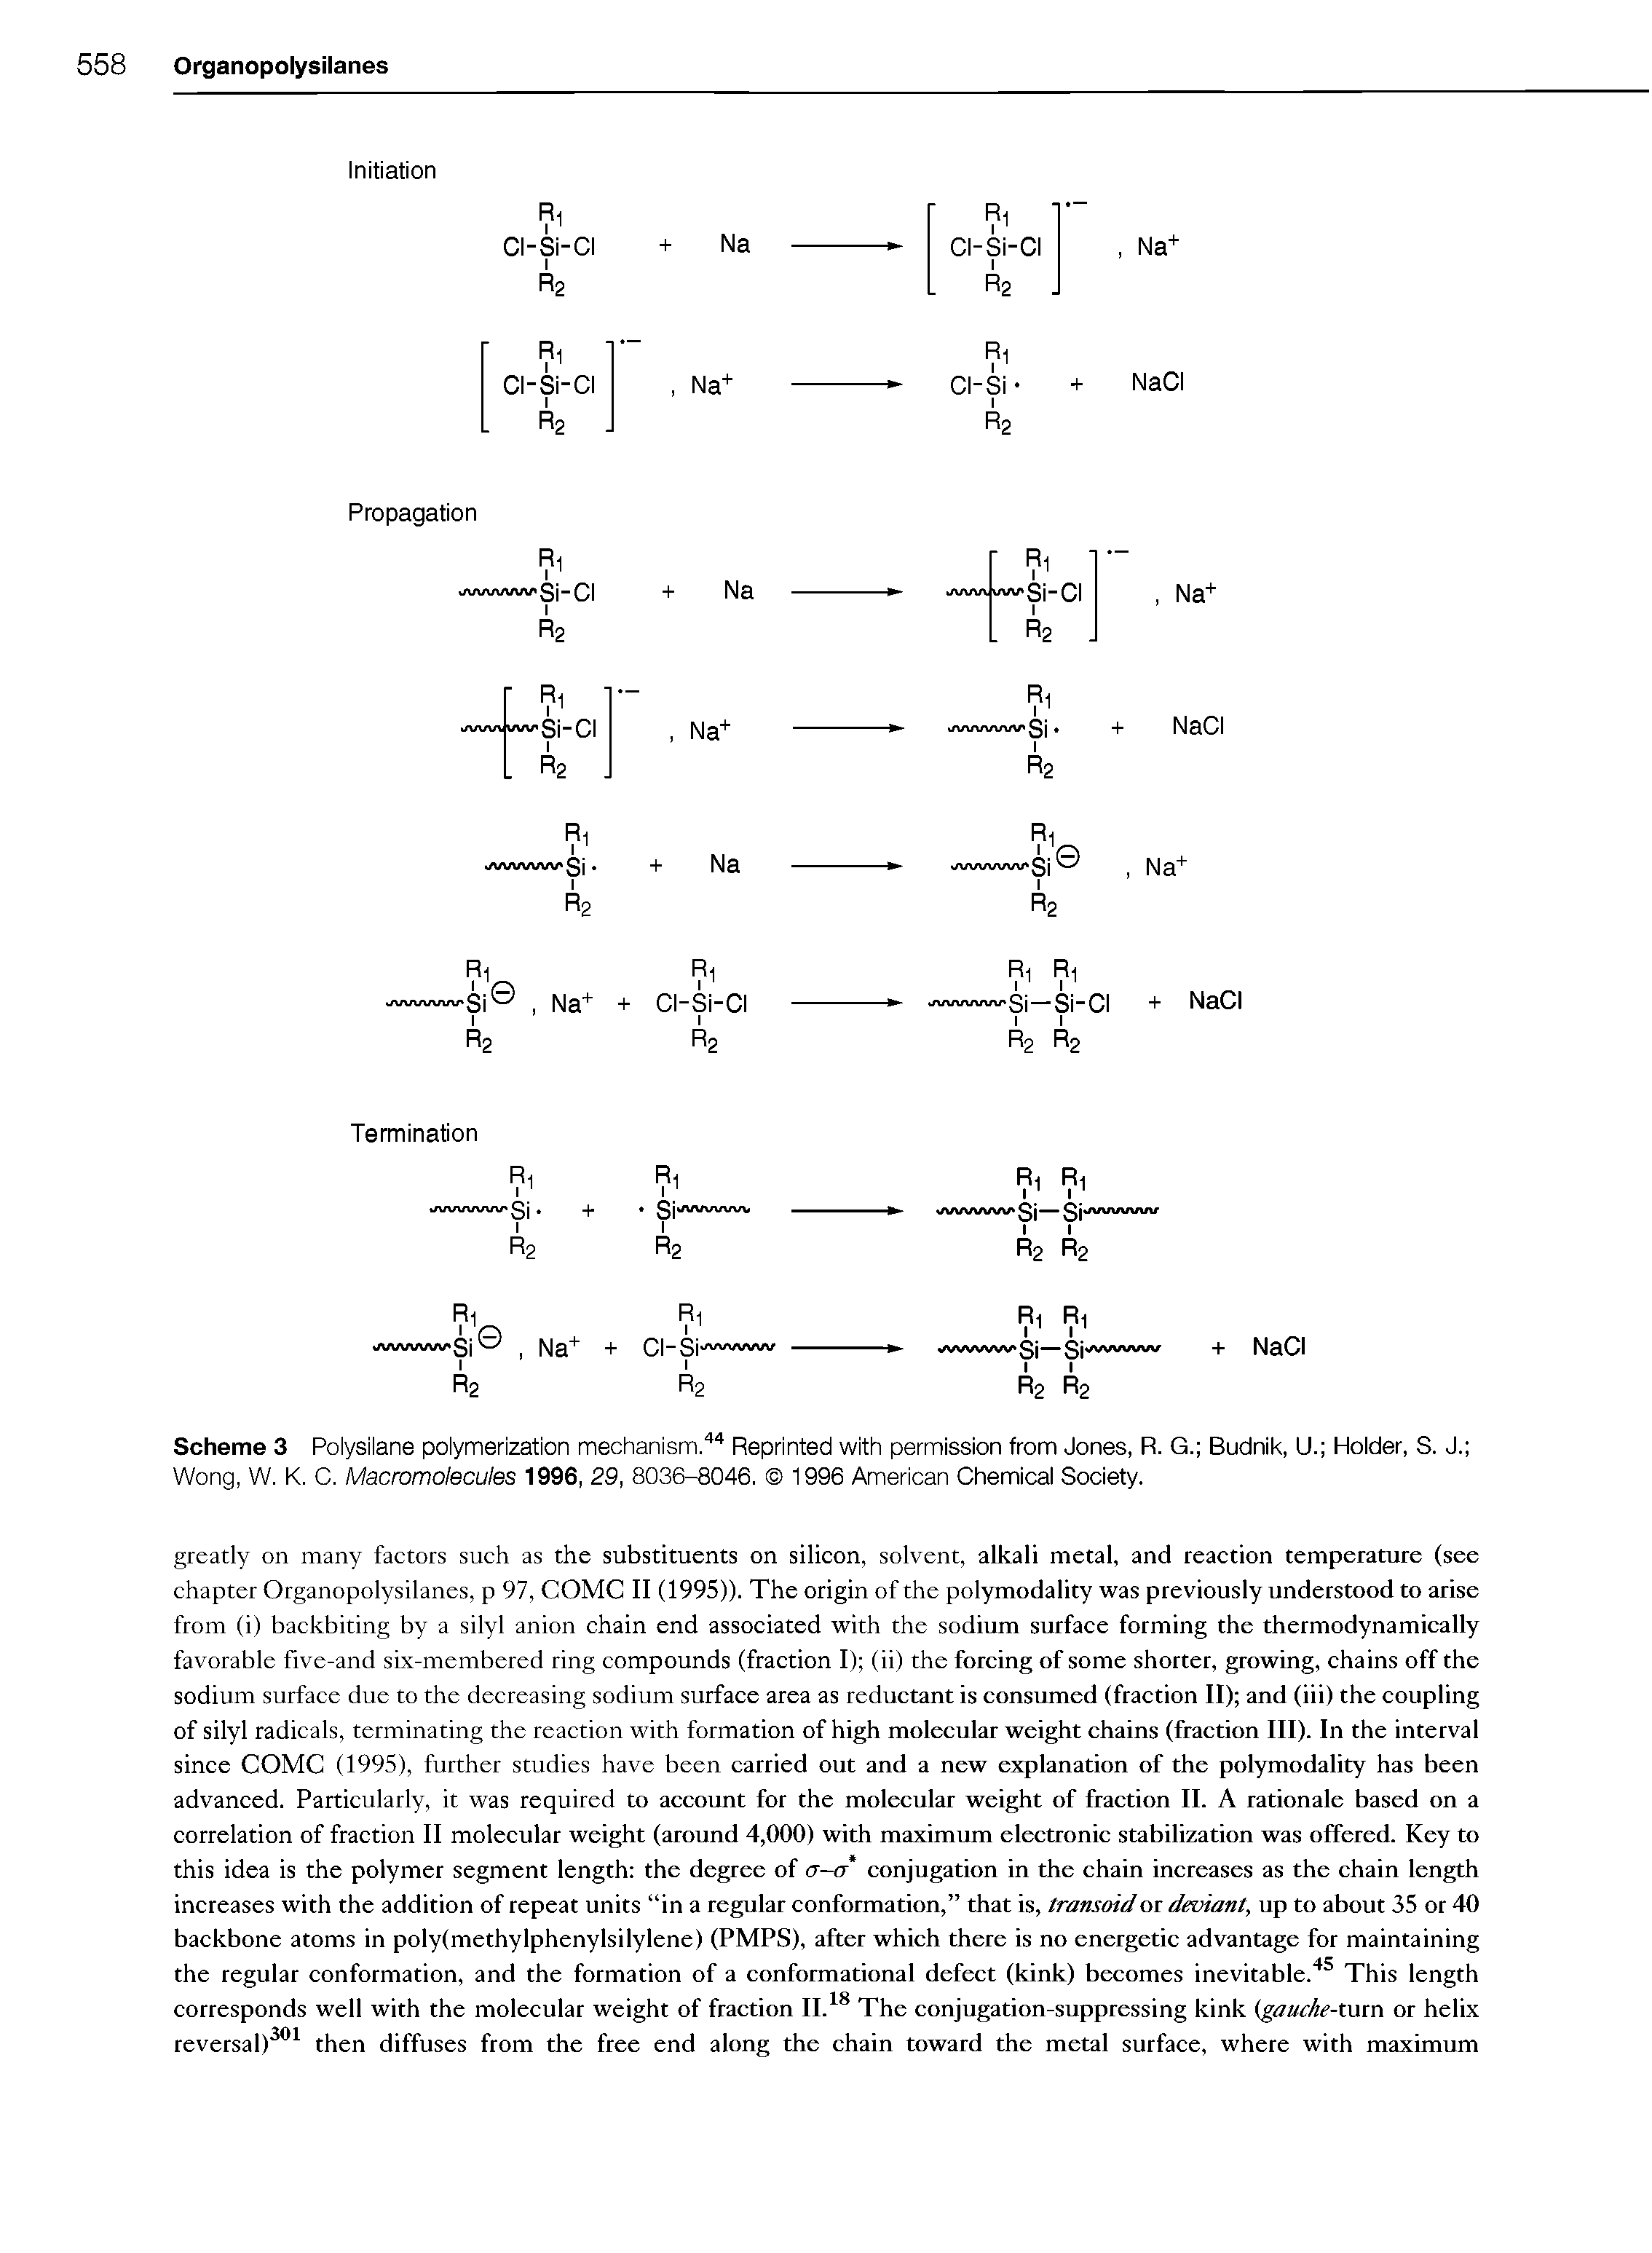 Scheme 3 Polysilane polymerization mechanism.44 Reprinted with permission from Jones, R. G. Budnik, U. Holder, S. J. Wong, W. K. C. Macromolecules 1996, 29, 8036-8046. 1996 American Chemical Society.